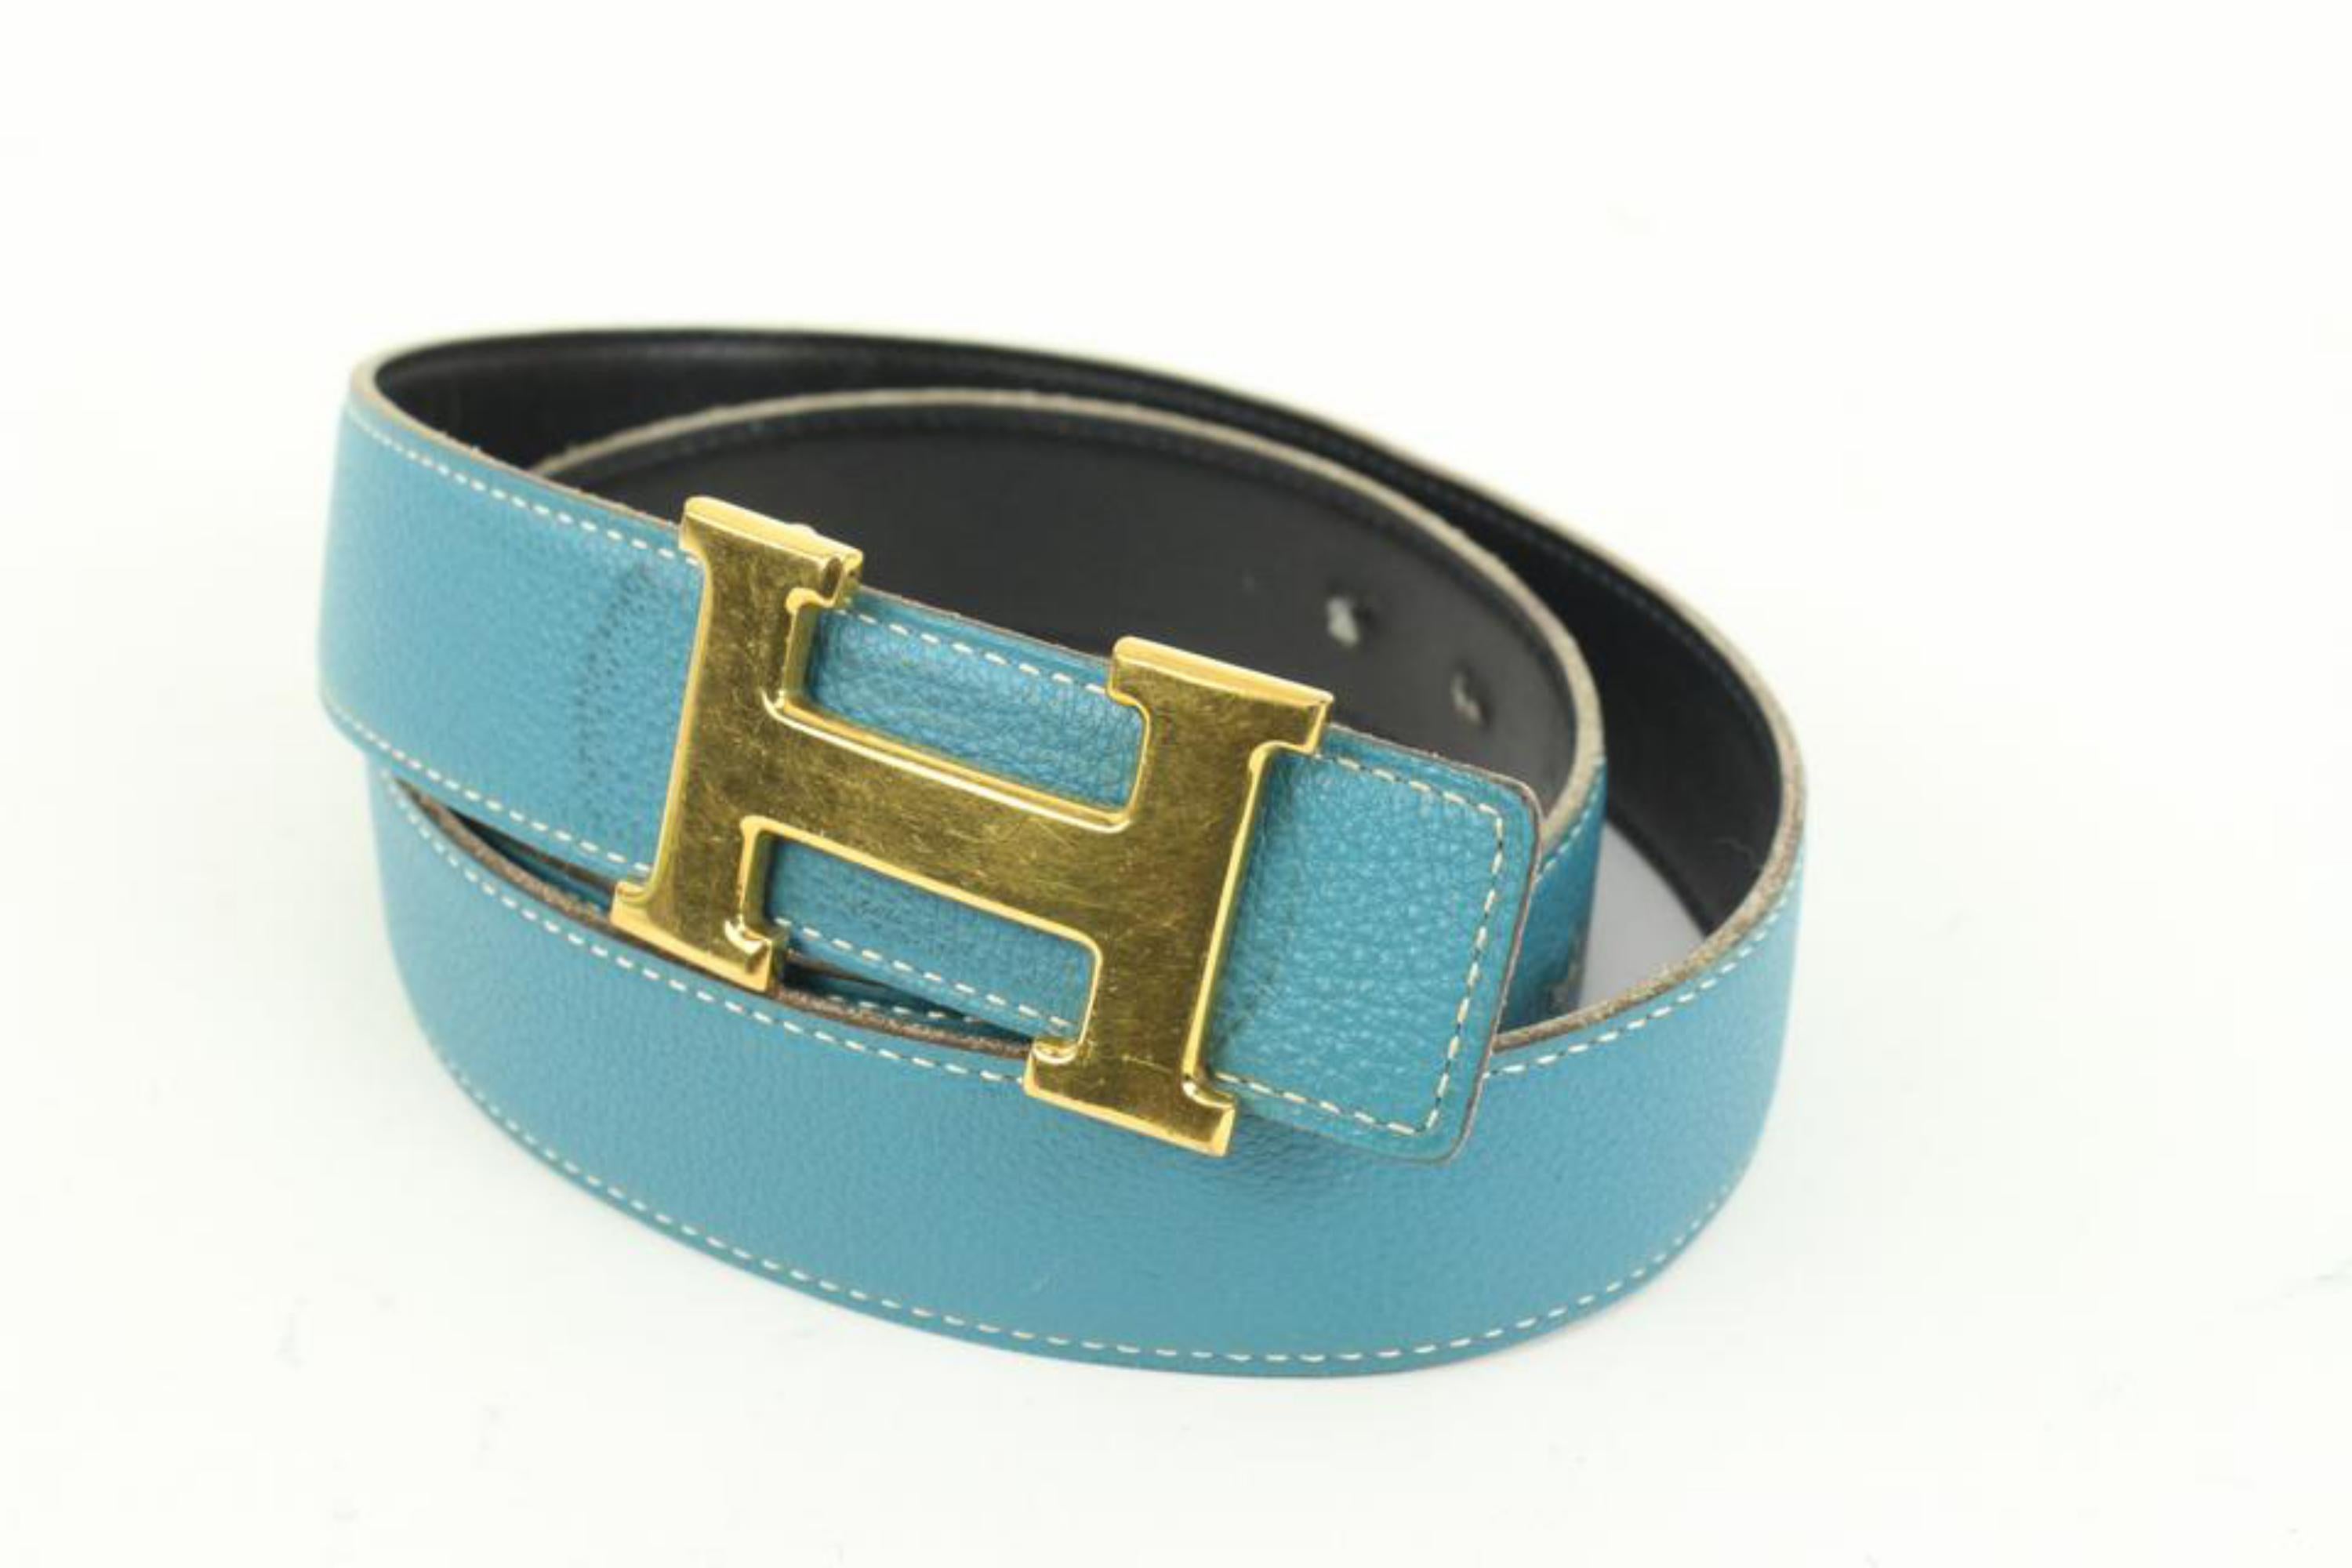 Hermès Black x Blue Jean x Gold 32mm Reversible H Logo Belt Kit 41h55
Date Code/Serial Number: J in s Square
Made In: France
Measurements: Length:  37.4